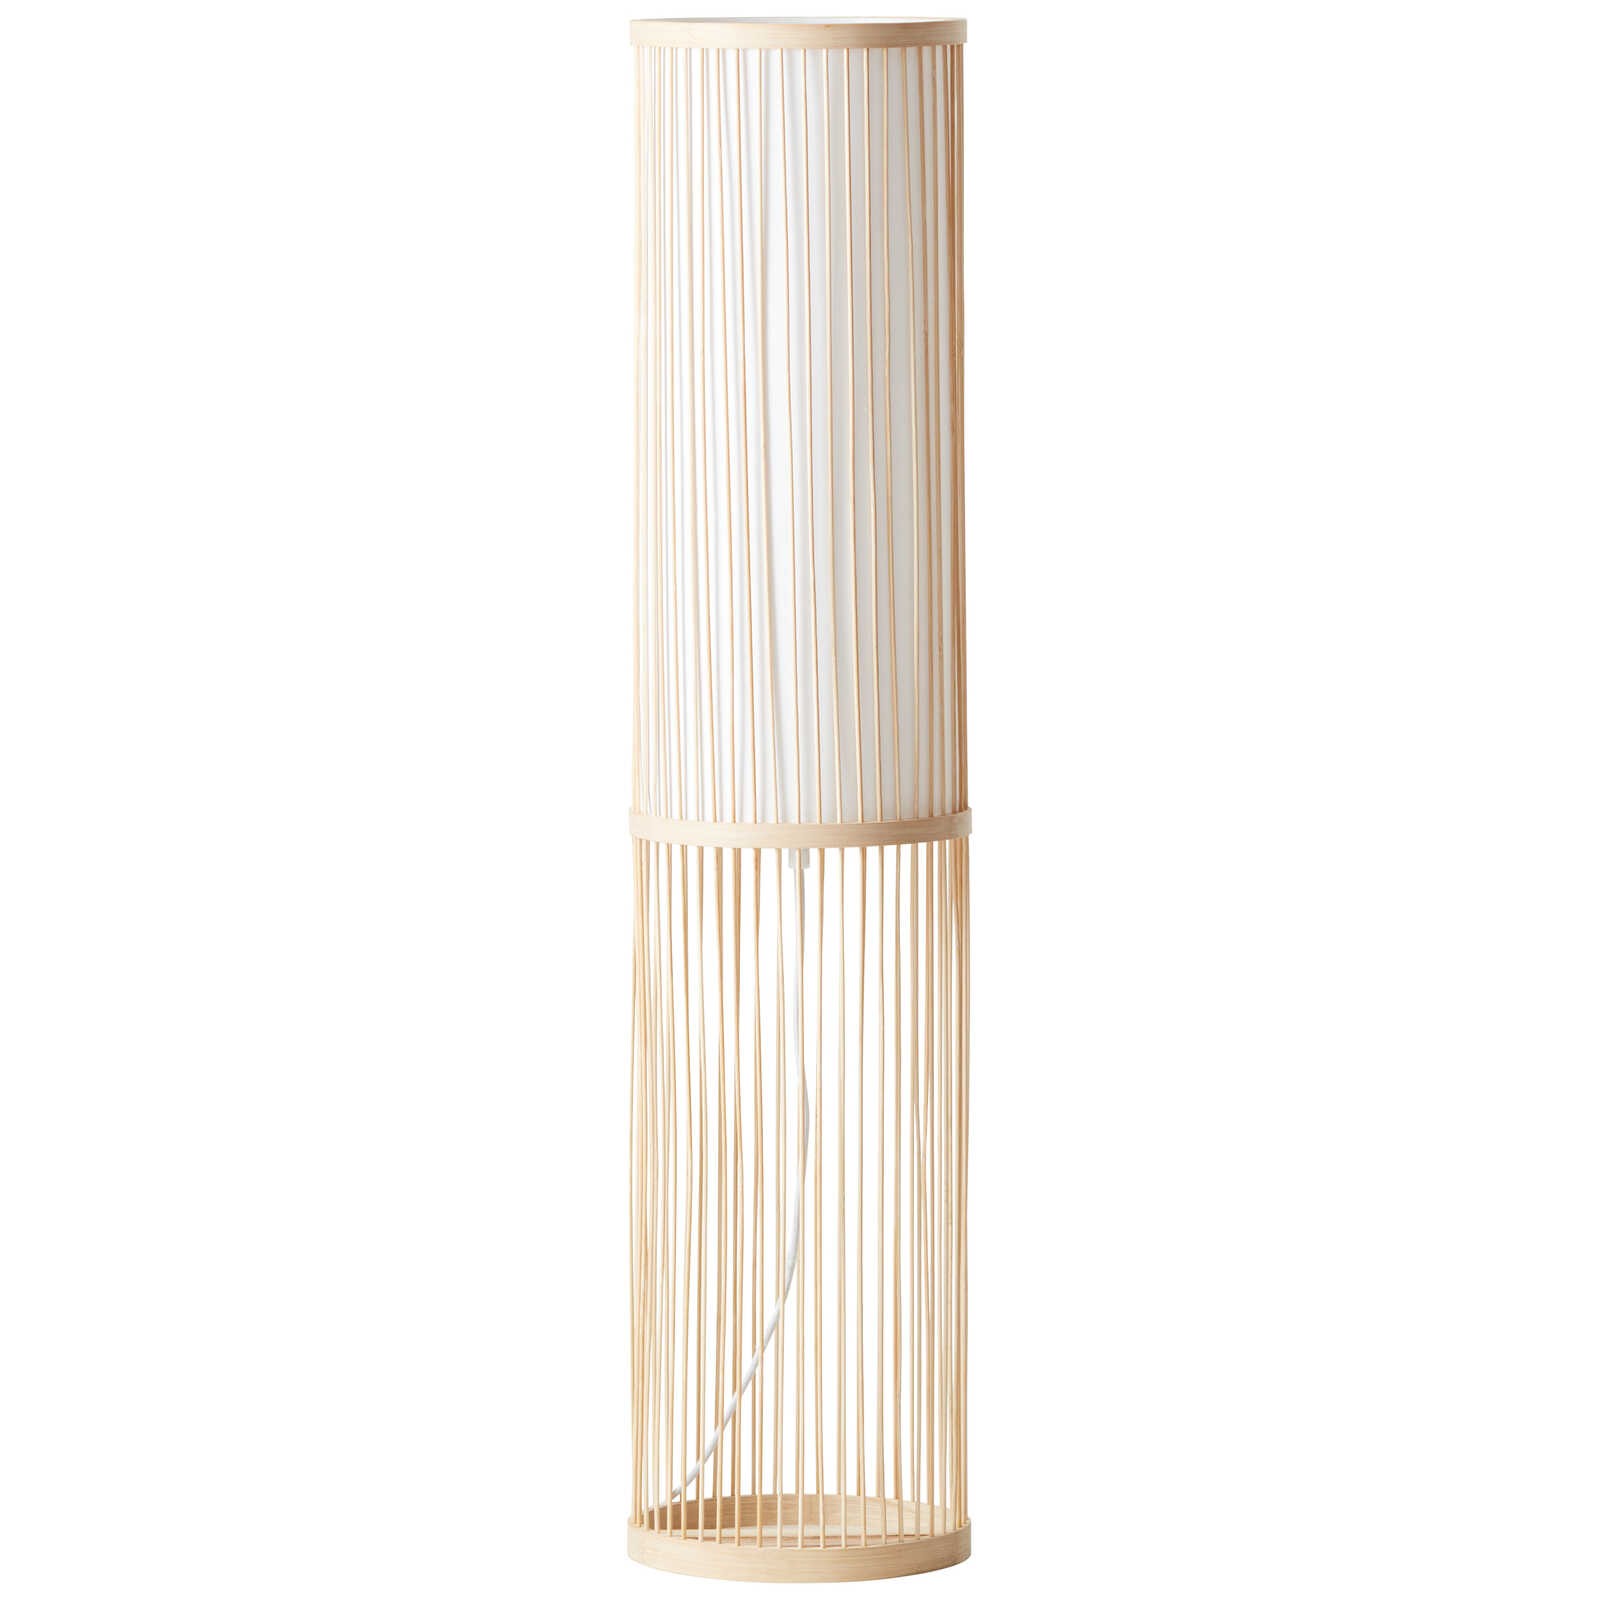             Lámpara de pie de bambú - Luise 1 - Marrón
        